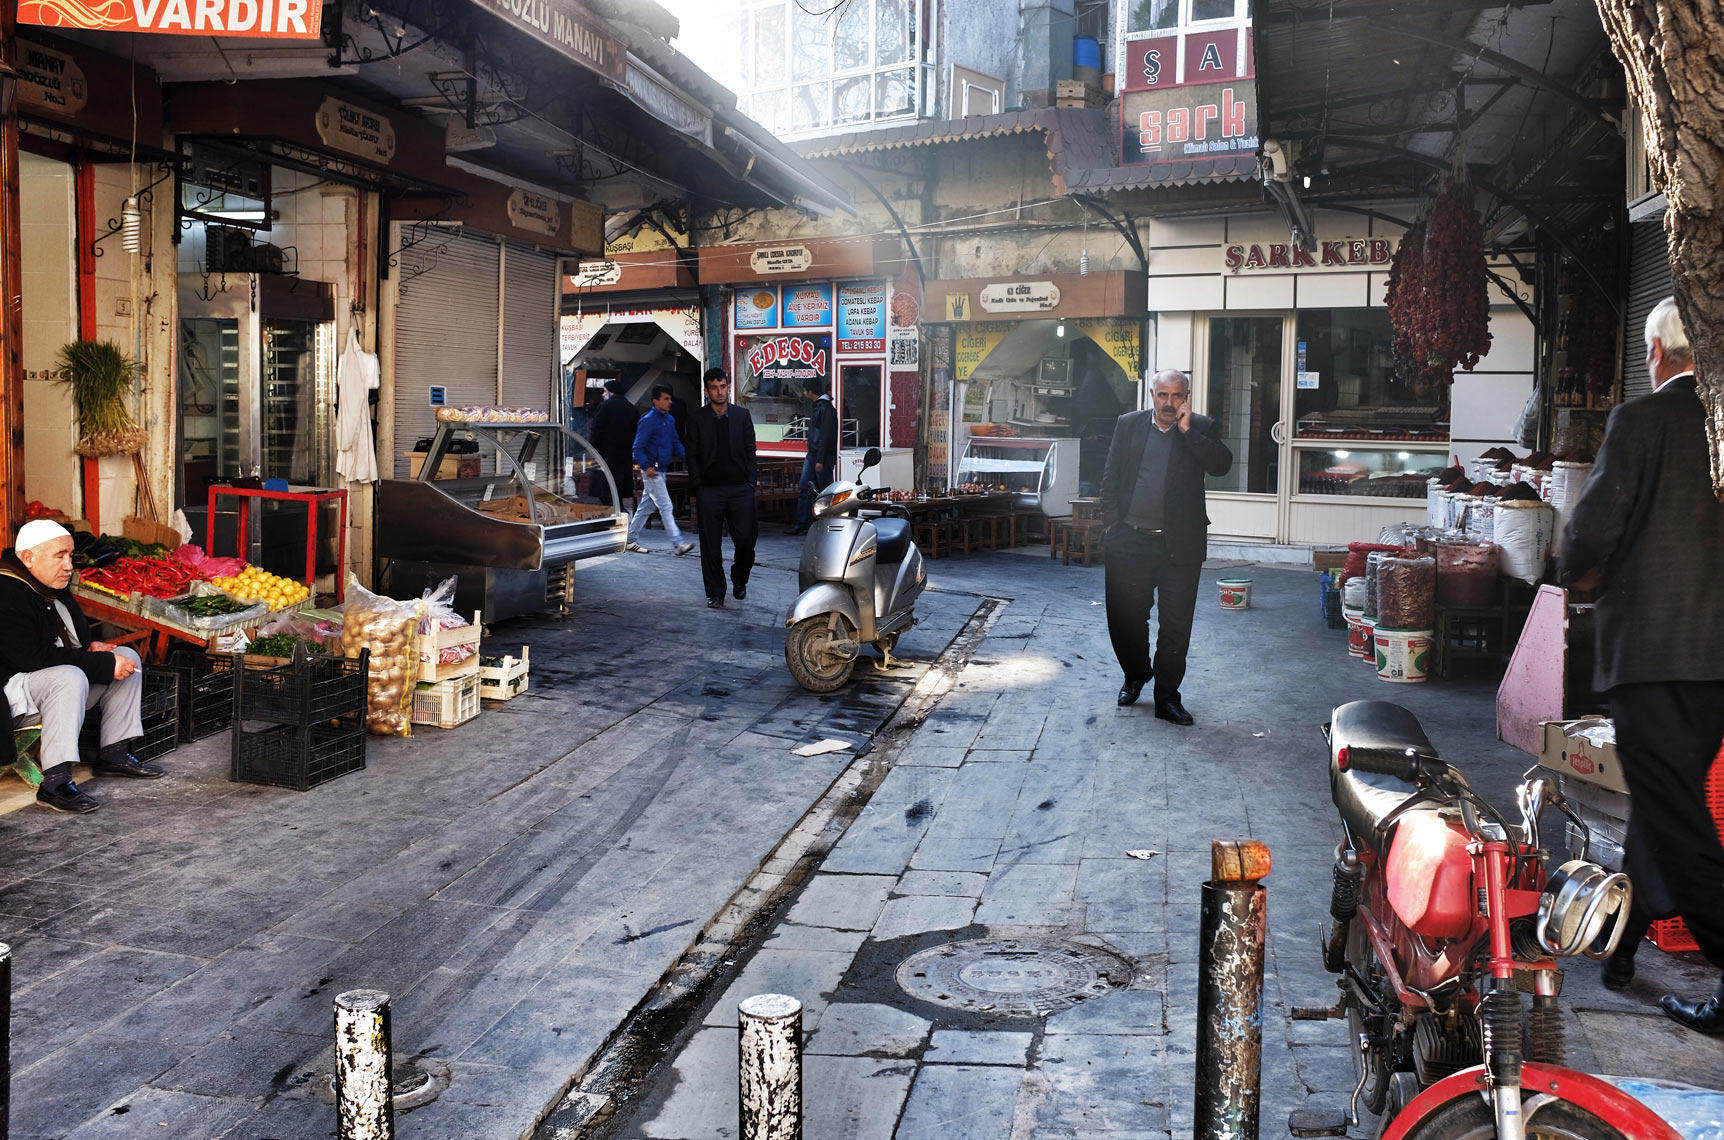 IMG_0515 street portrait photography by Shane Nagle: Turkey